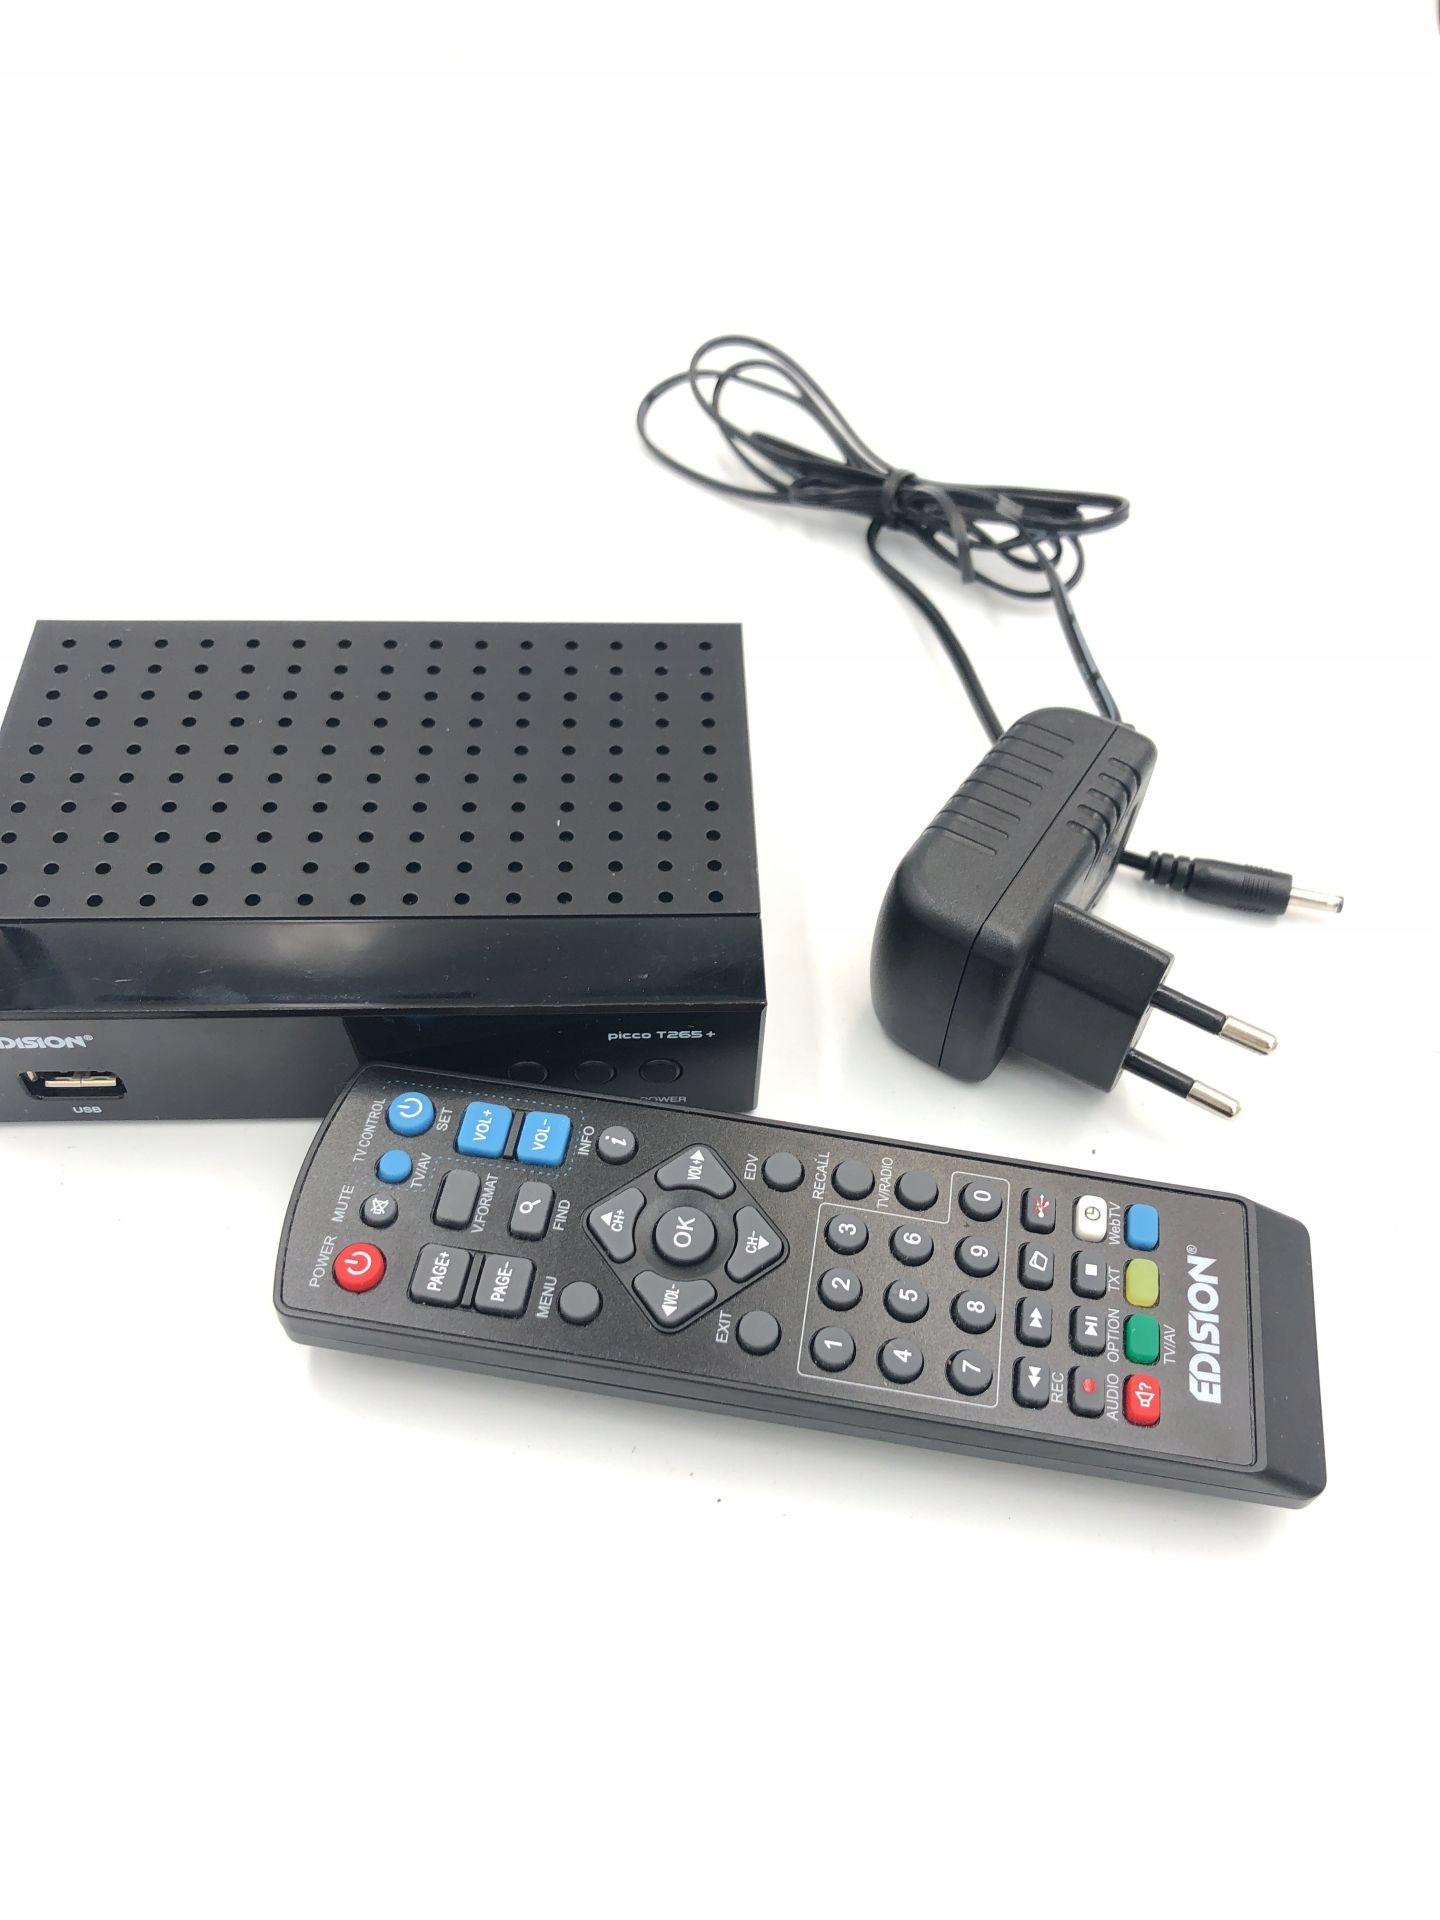 Tuner DVB-T2 Edision Picco T265+ H265 HEVC - Sklep, Opinie, Cena w